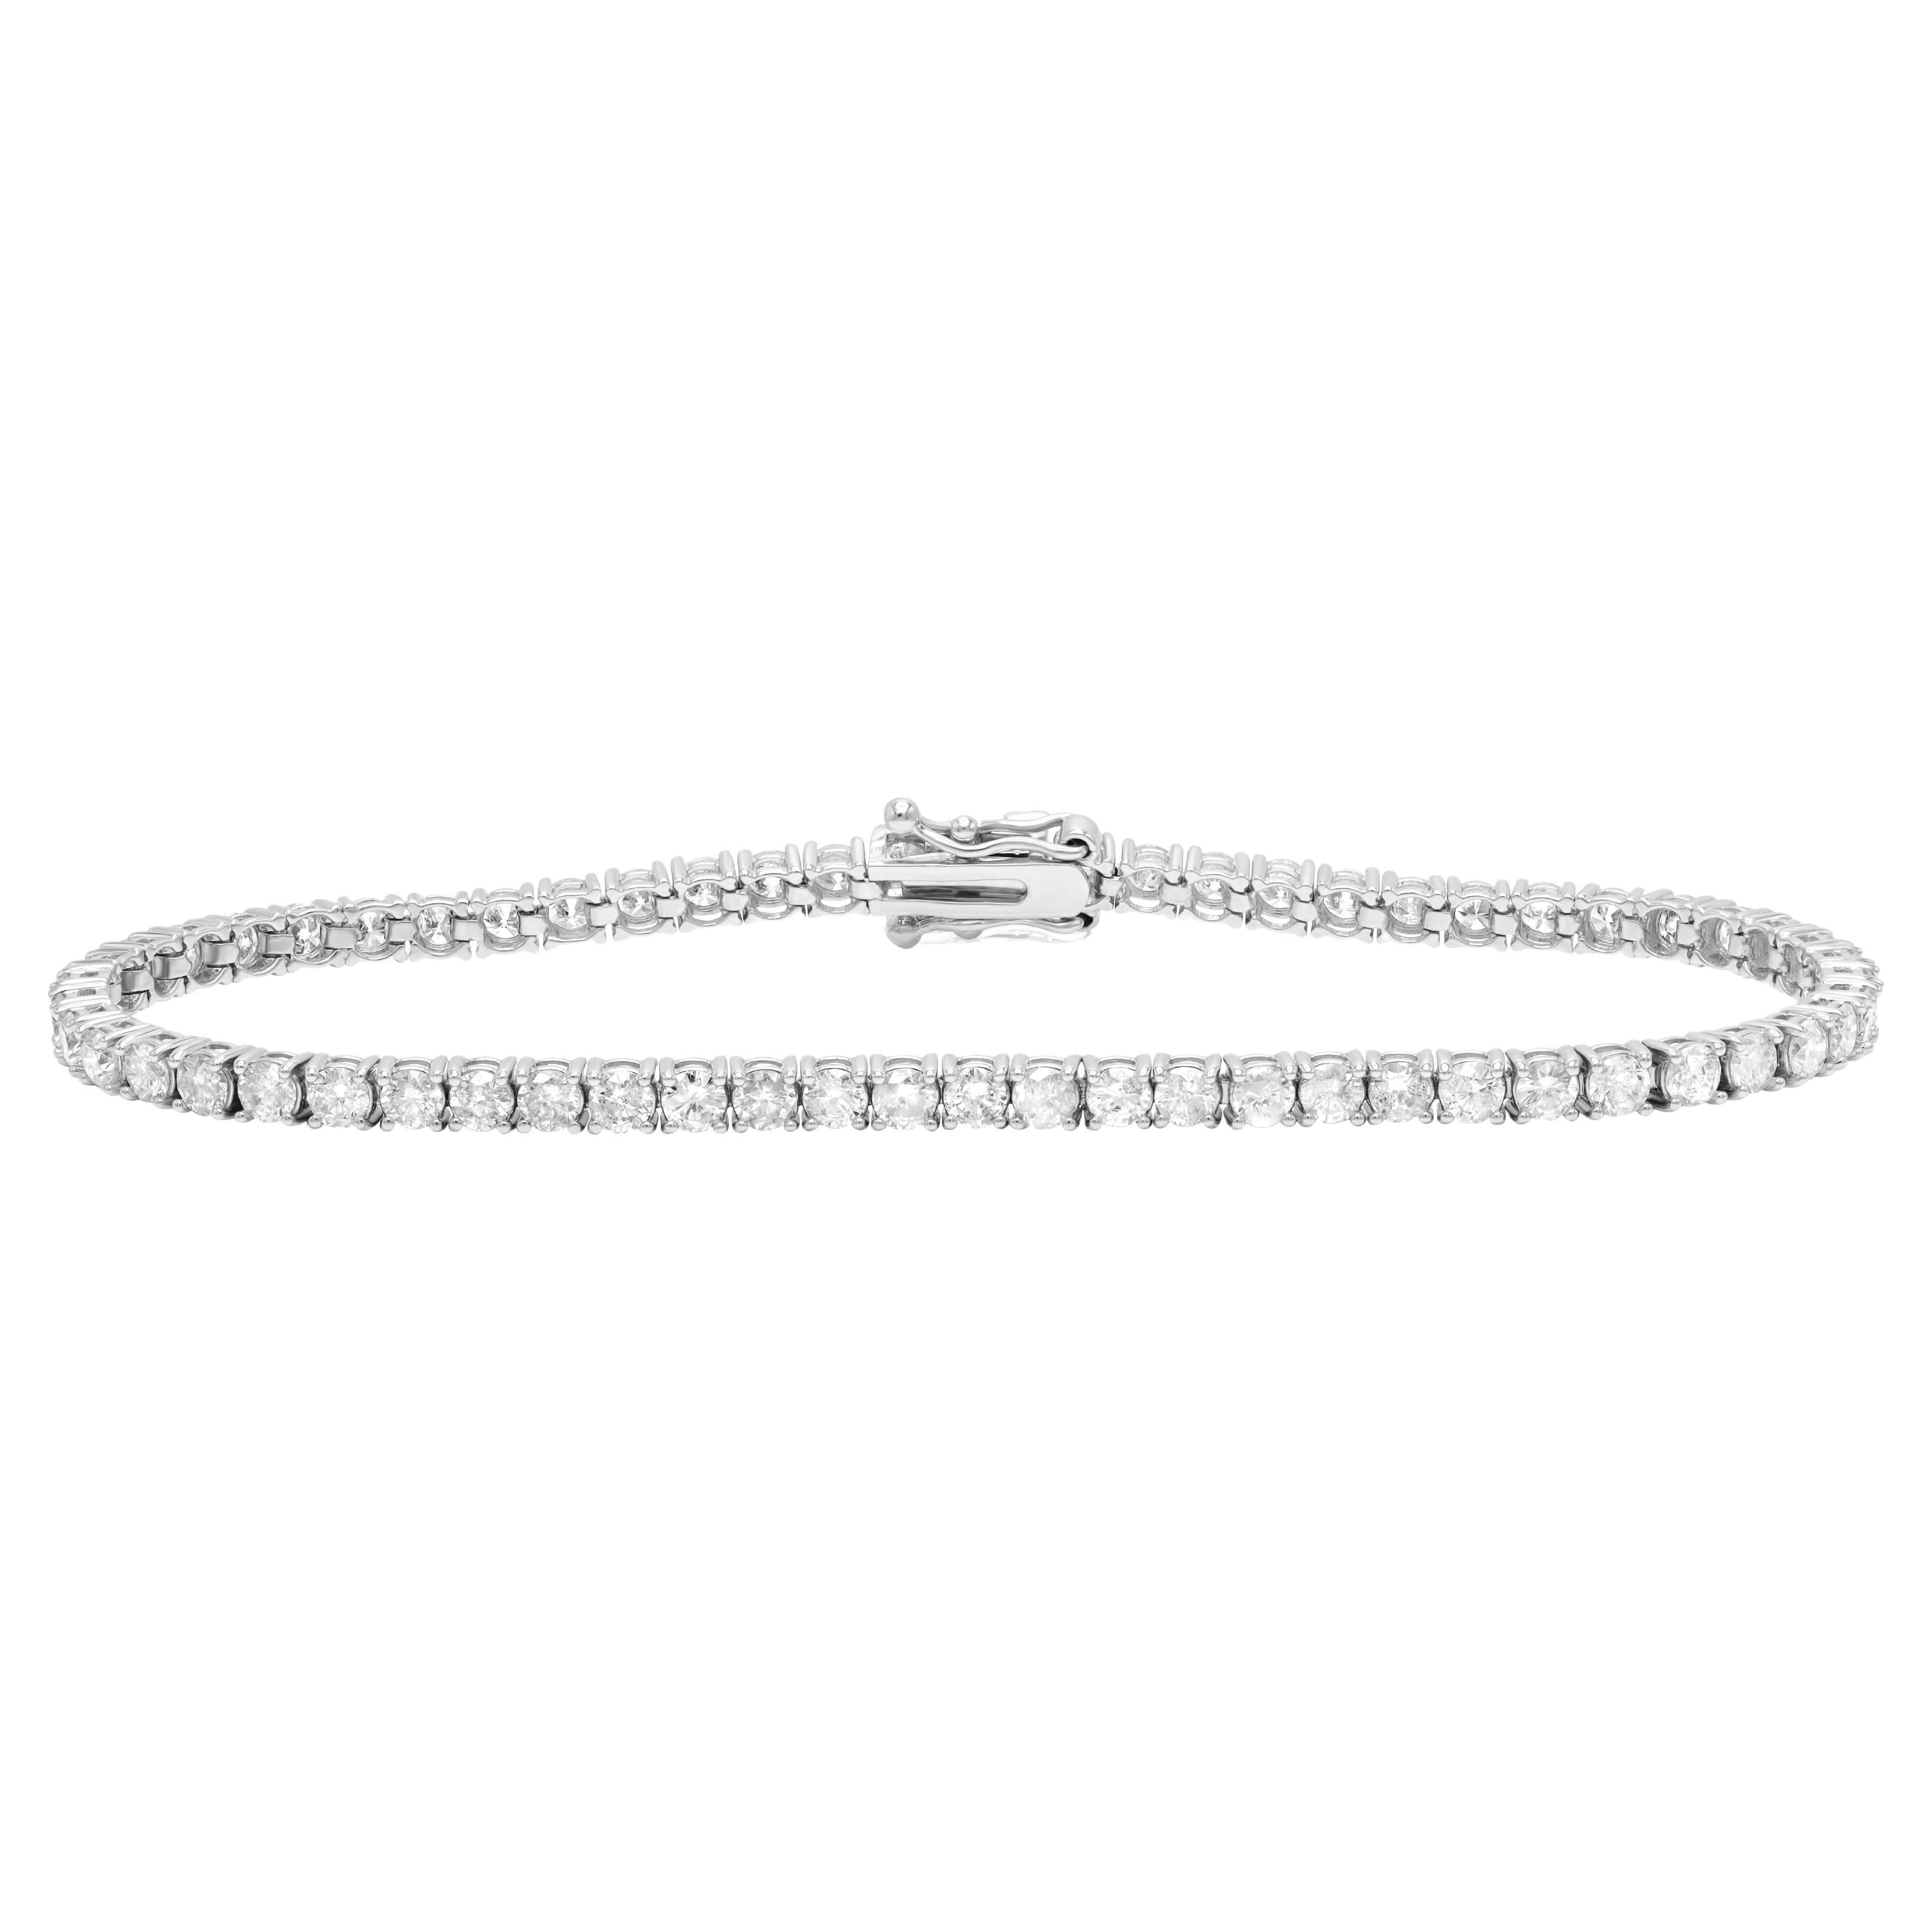 Diana M. Custom 4.50 Cts Diamond Tennis Bracelet in  14kt White Gold For Sale